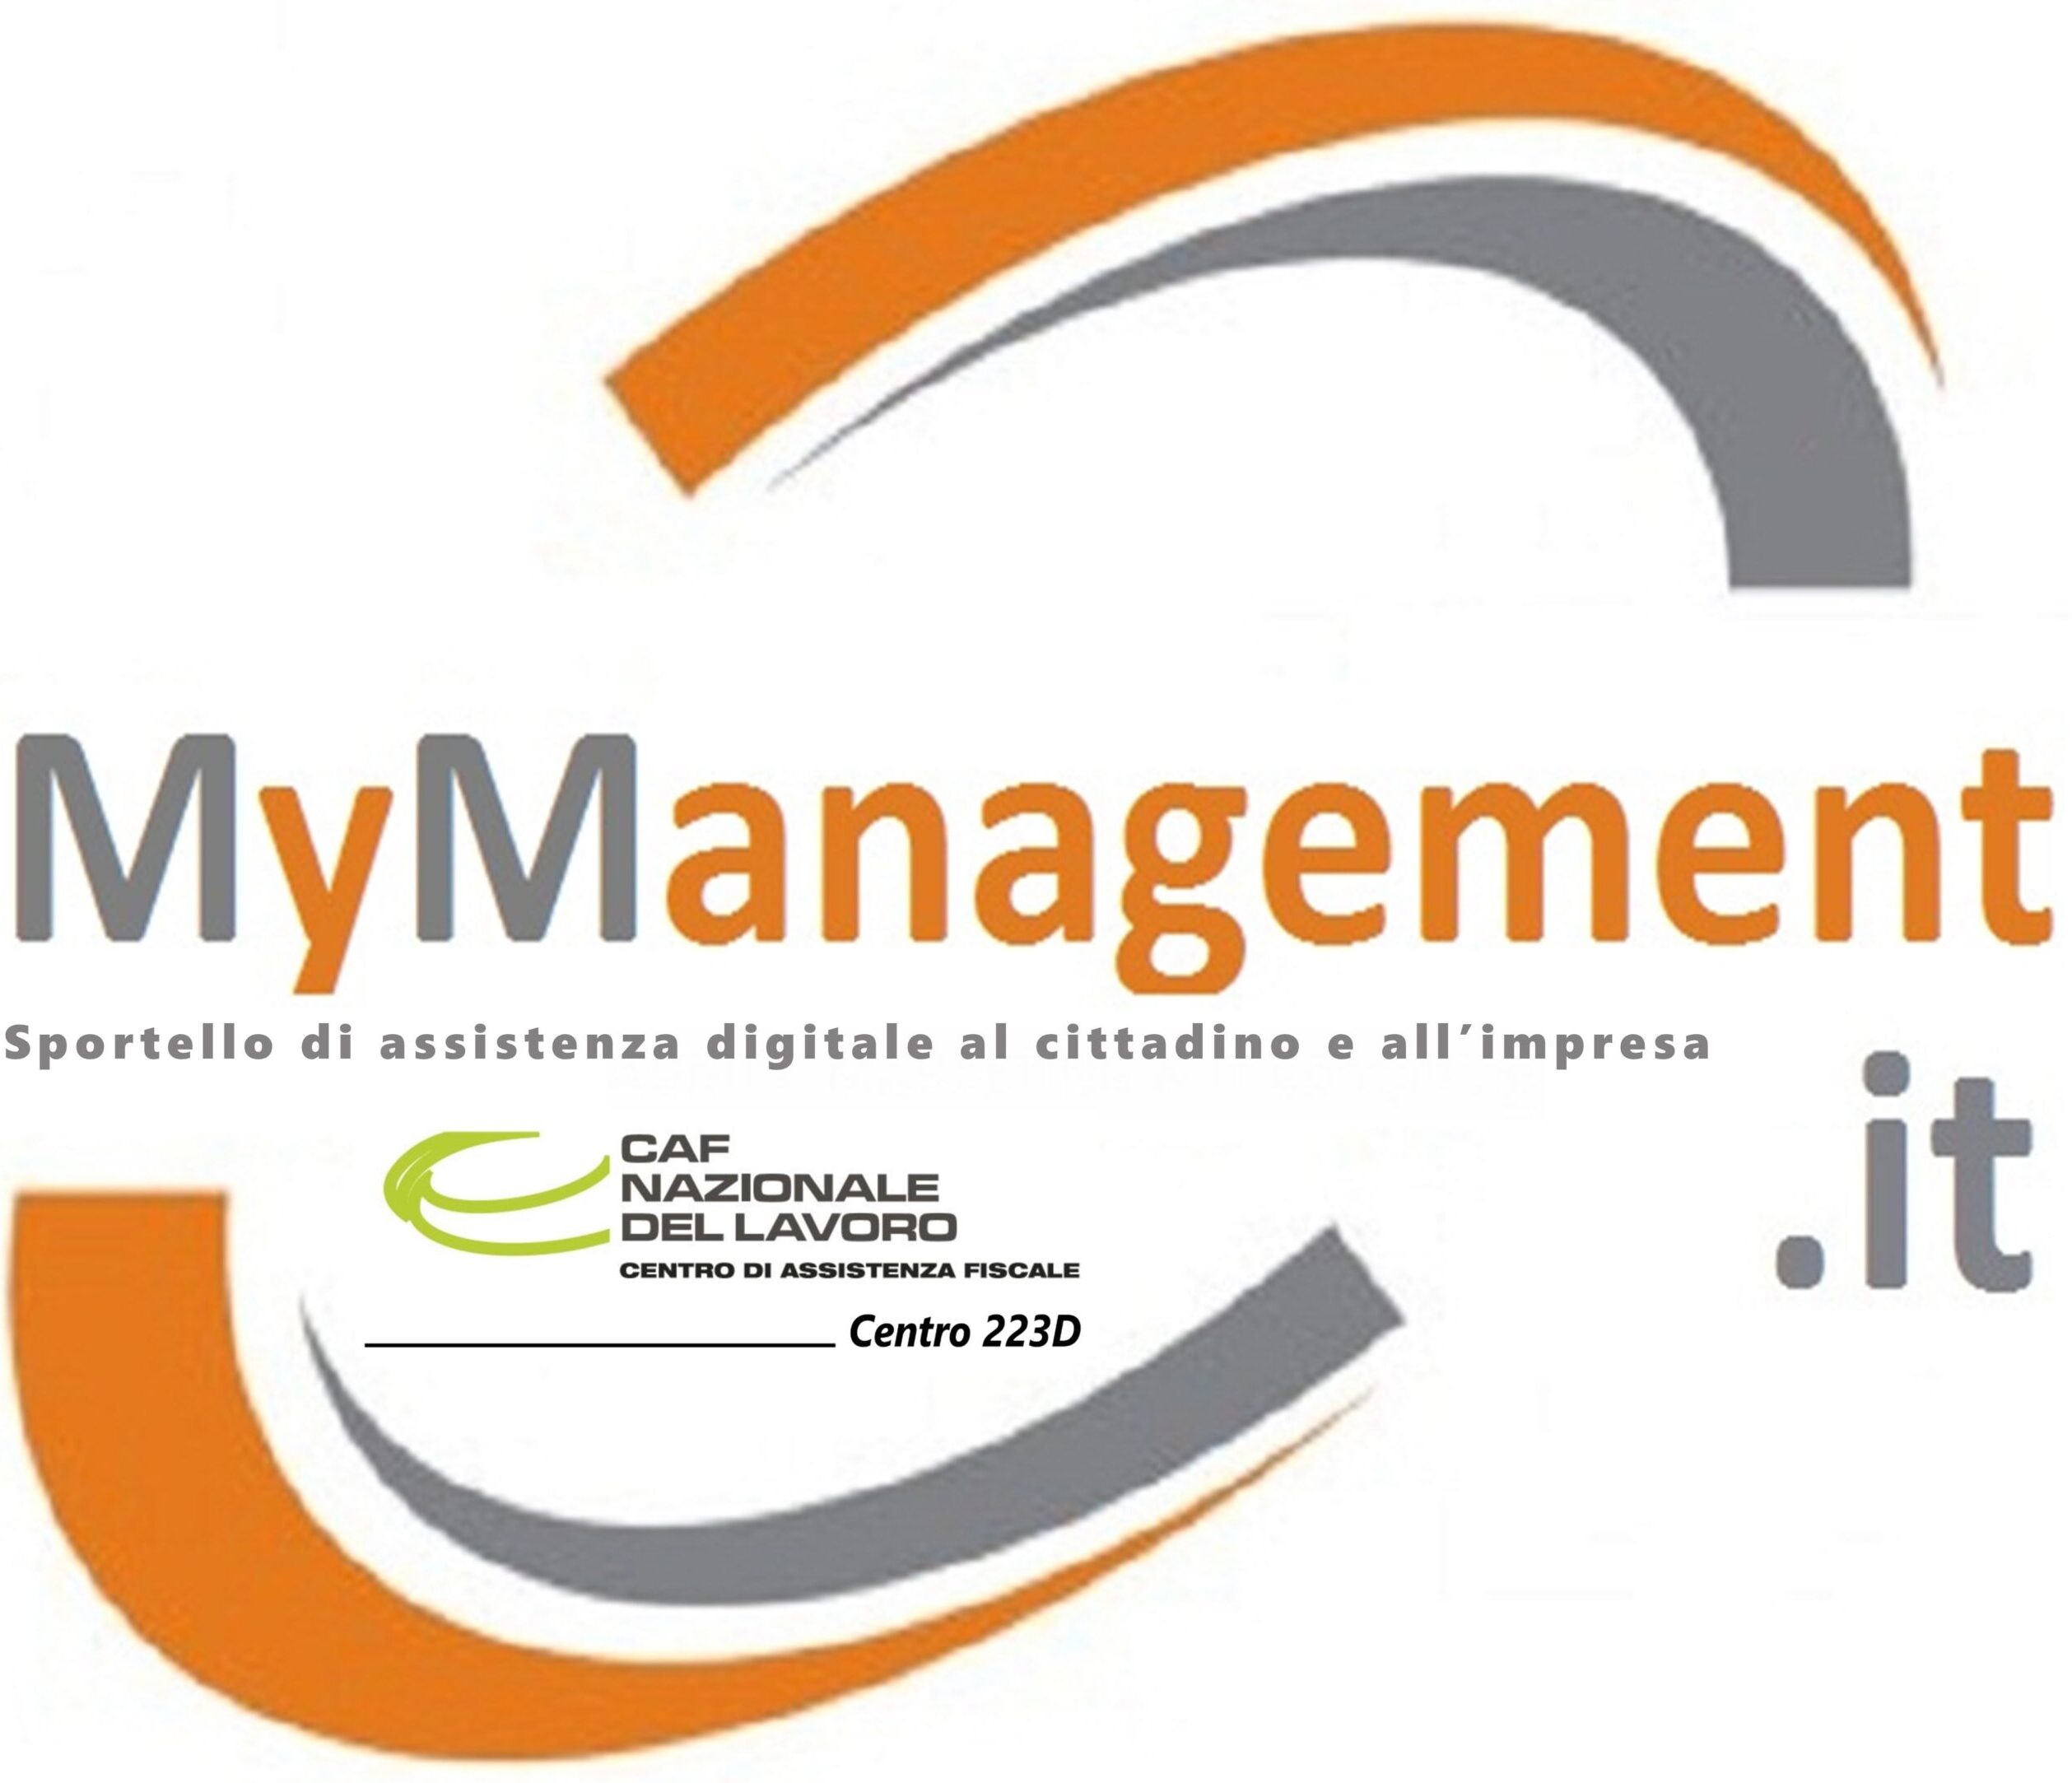 My Management – Caf, contabilità, Privacy e assistenza digitale a Catania e Valguarnera